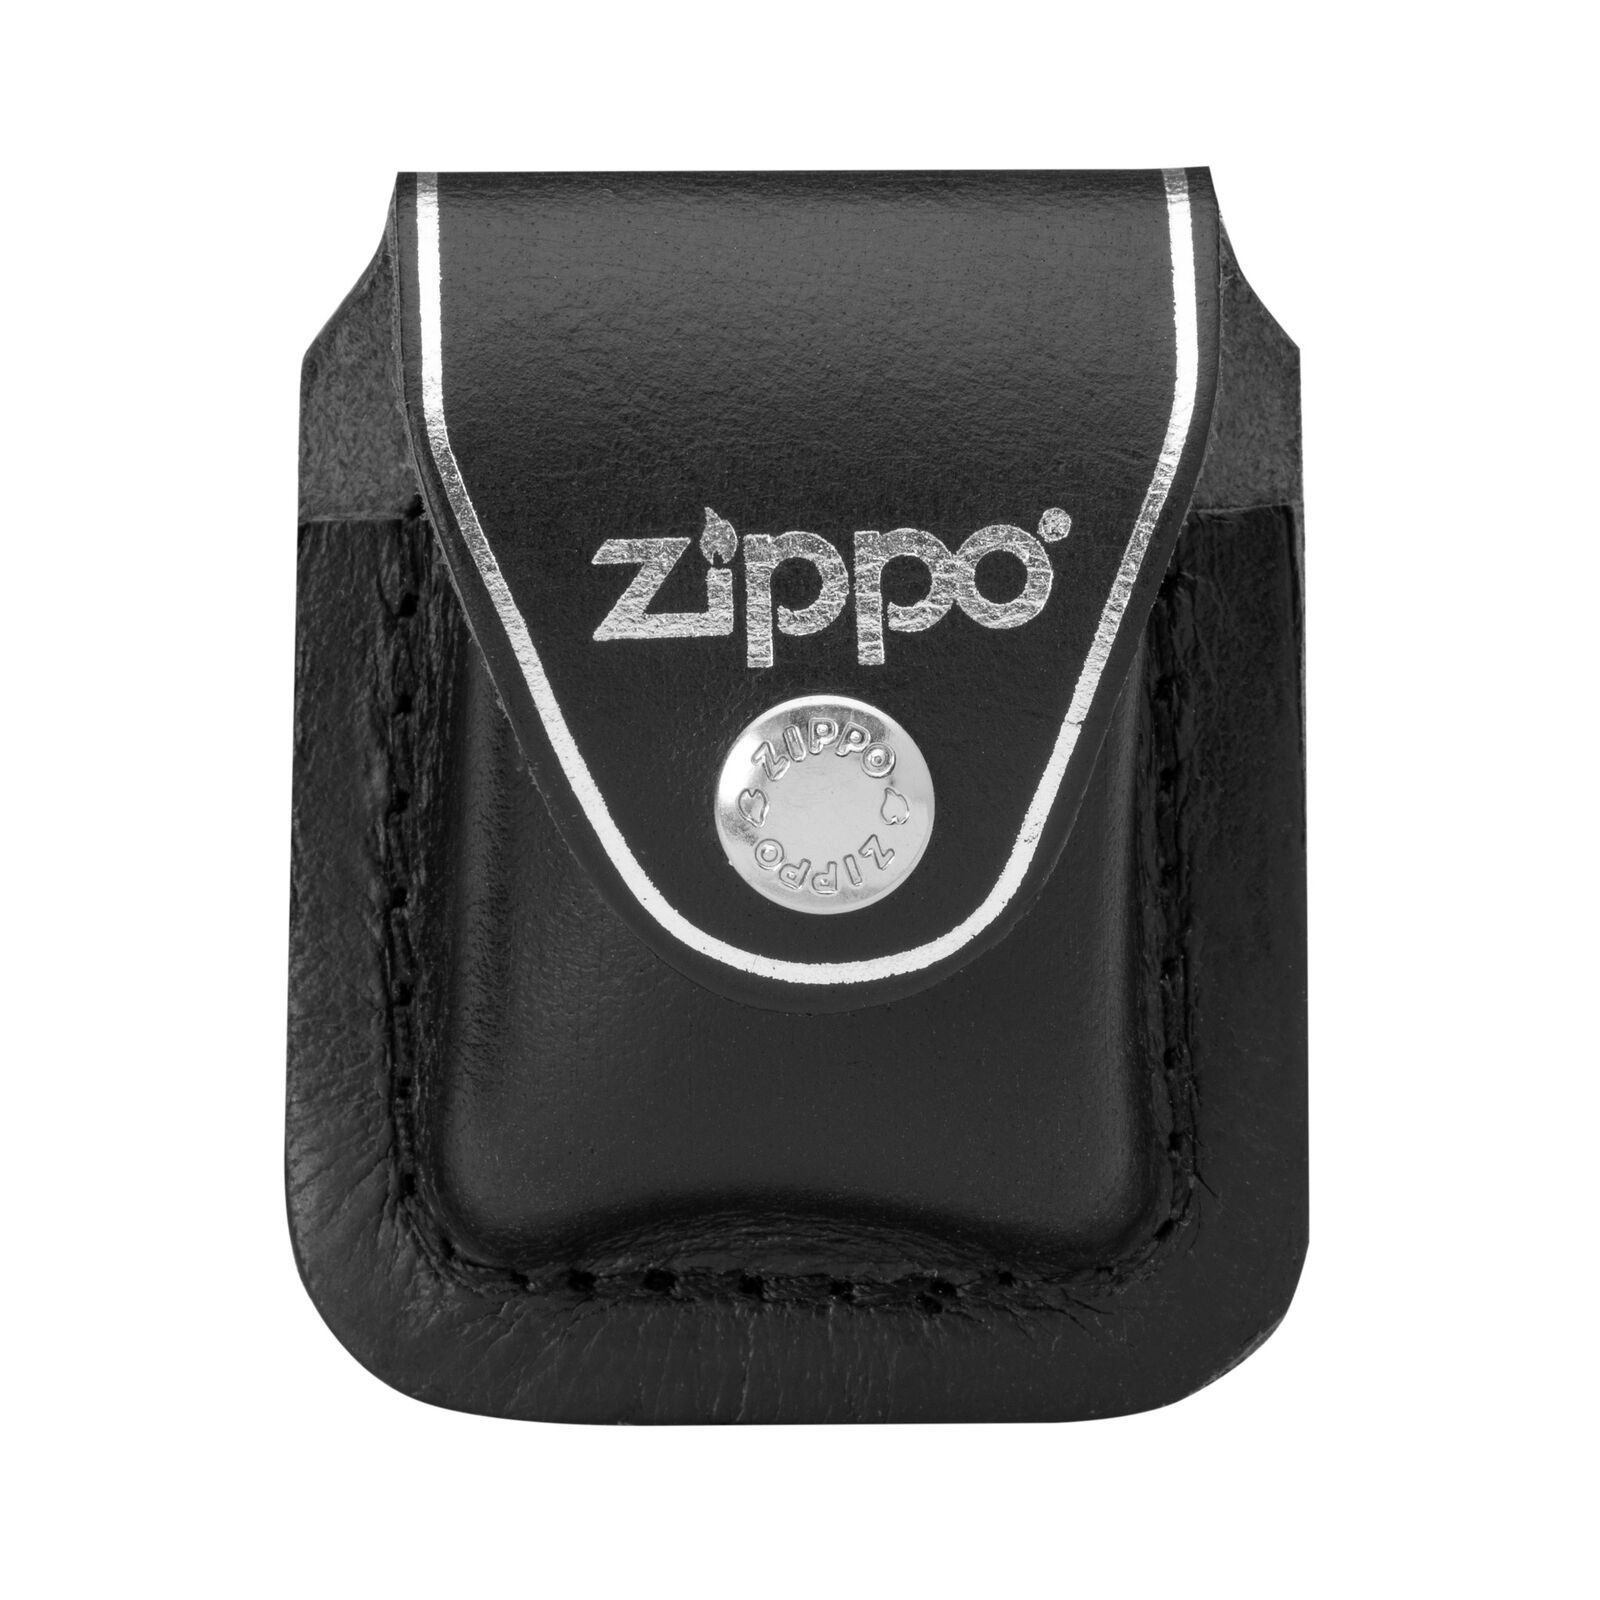 Zippo Black Clip Lighter Pouch, LPCBK